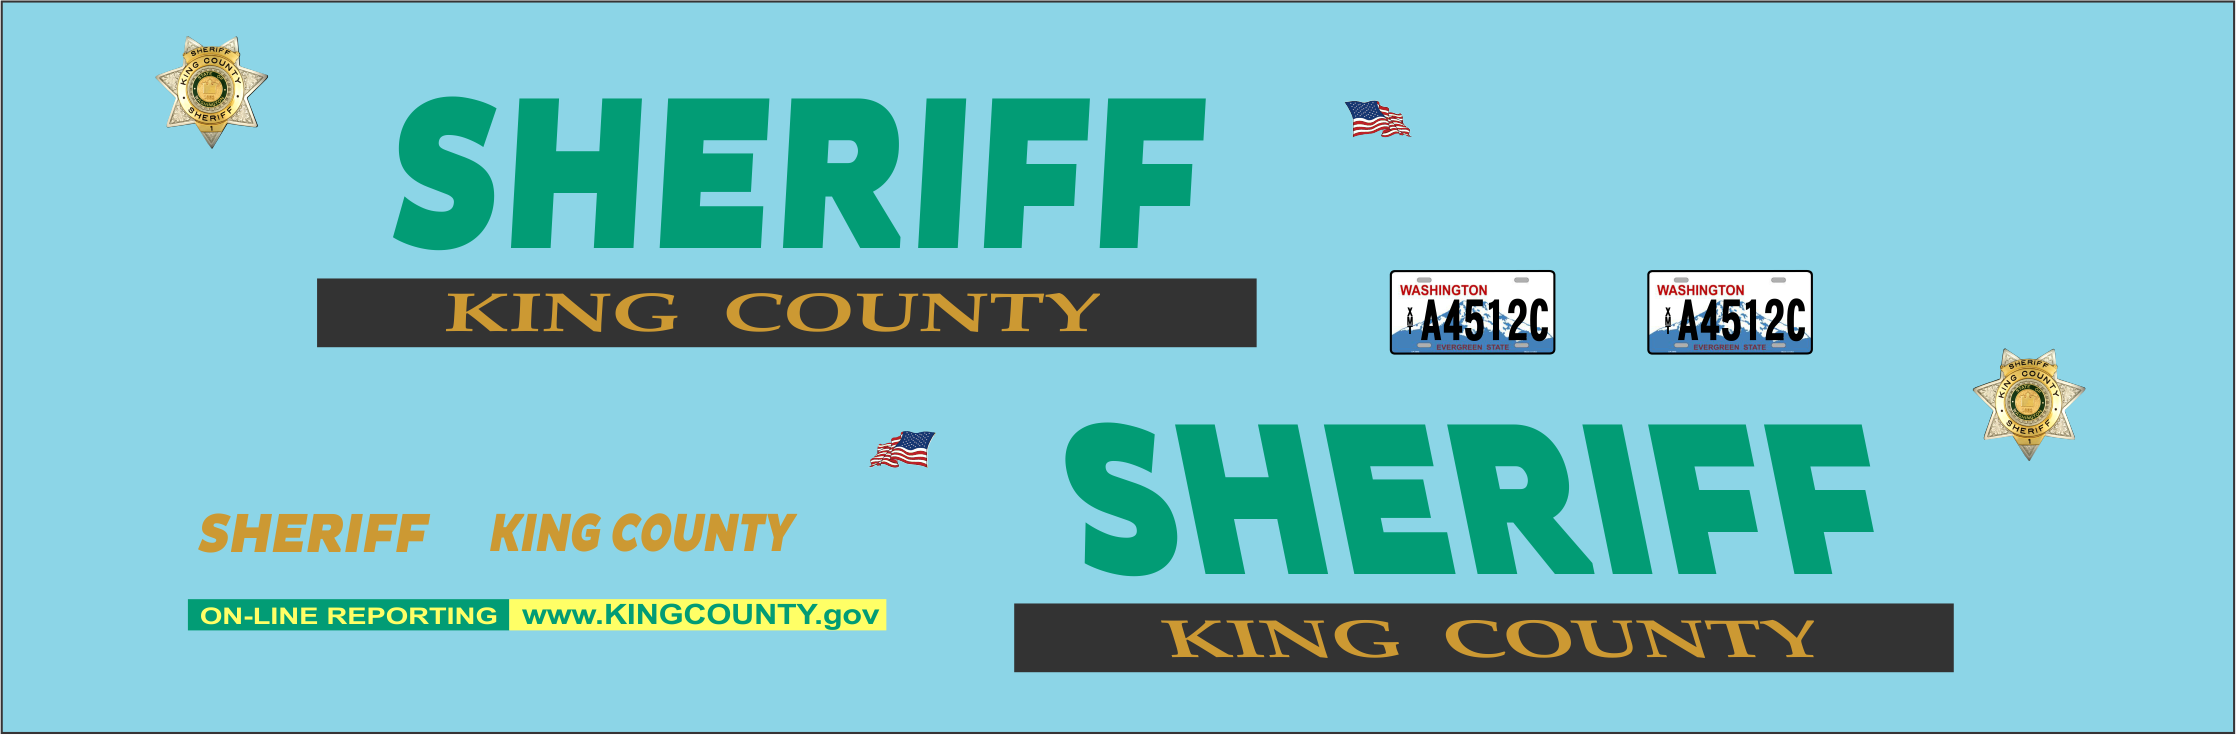 1/64 King County, Washington Sheriff's Department